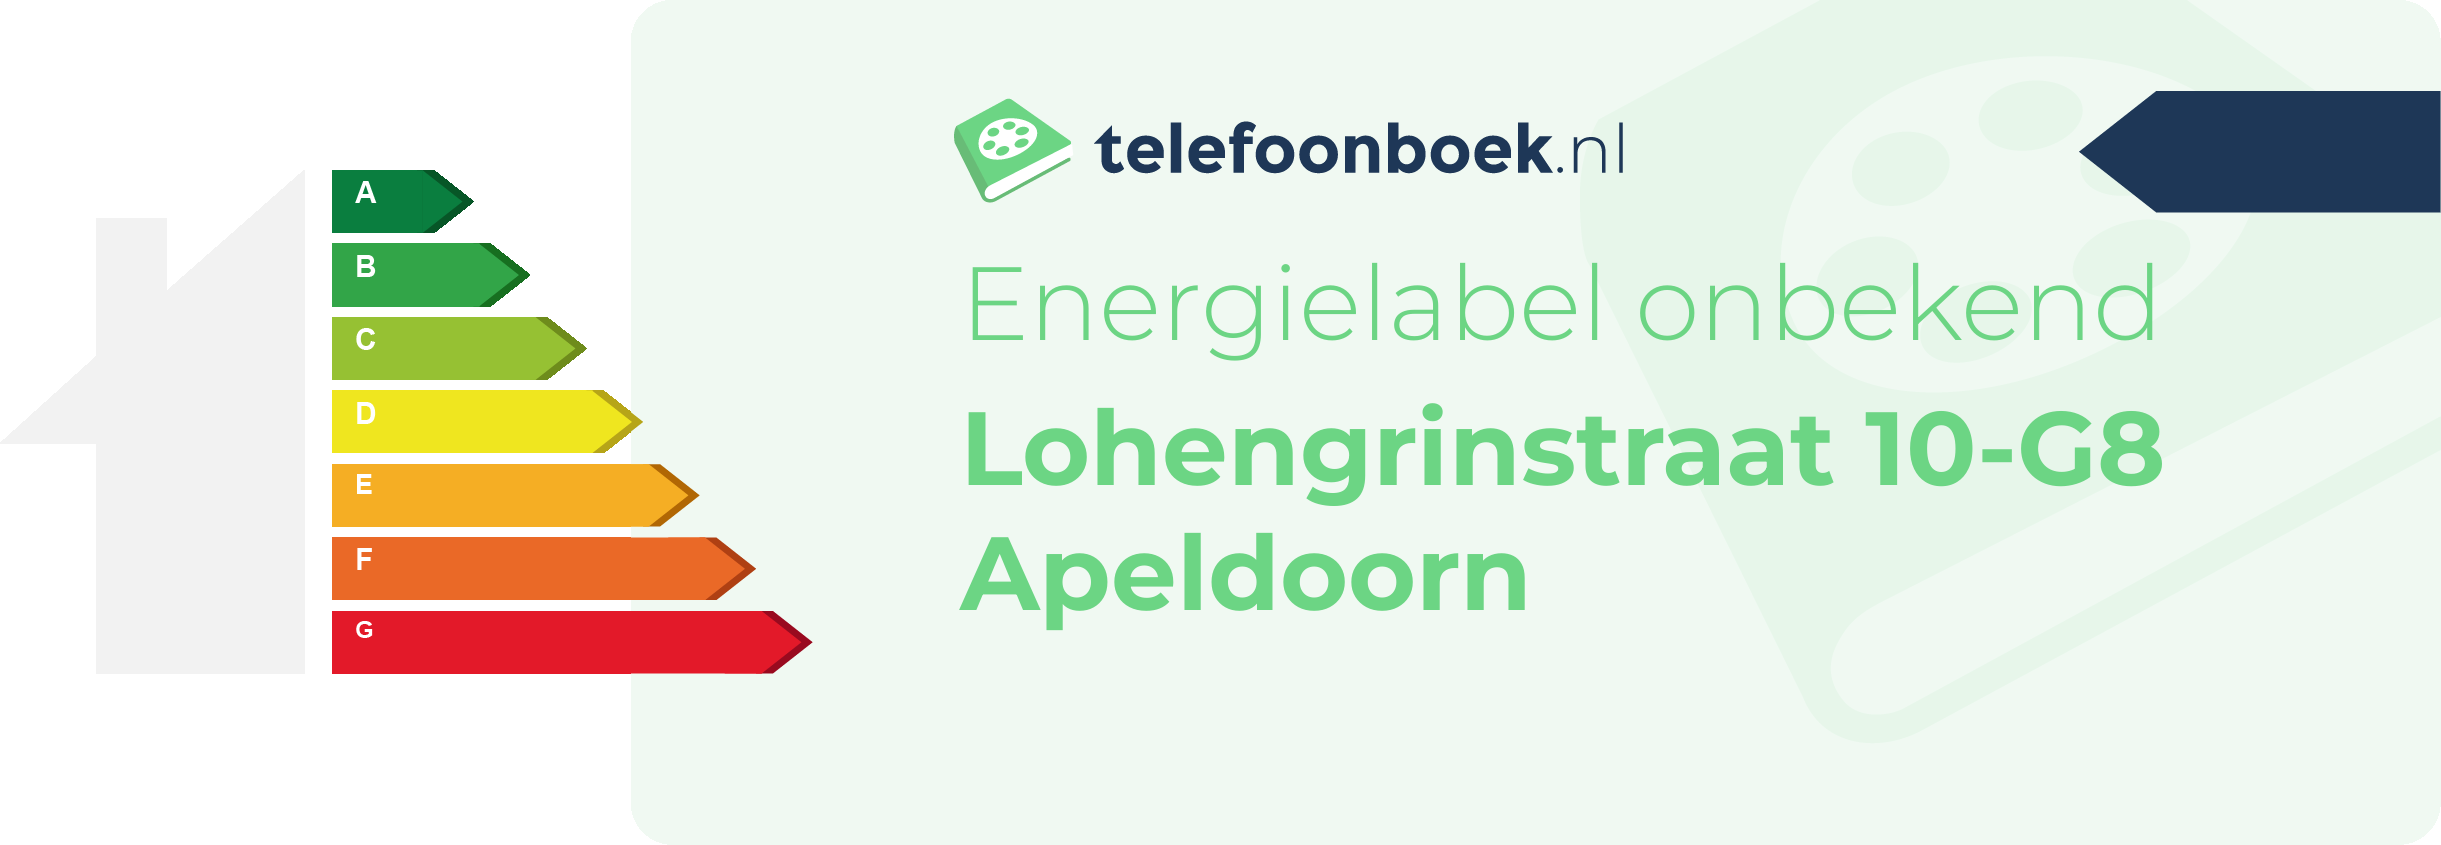 Energielabel Lohengrinstraat 10-G8 Apeldoorn